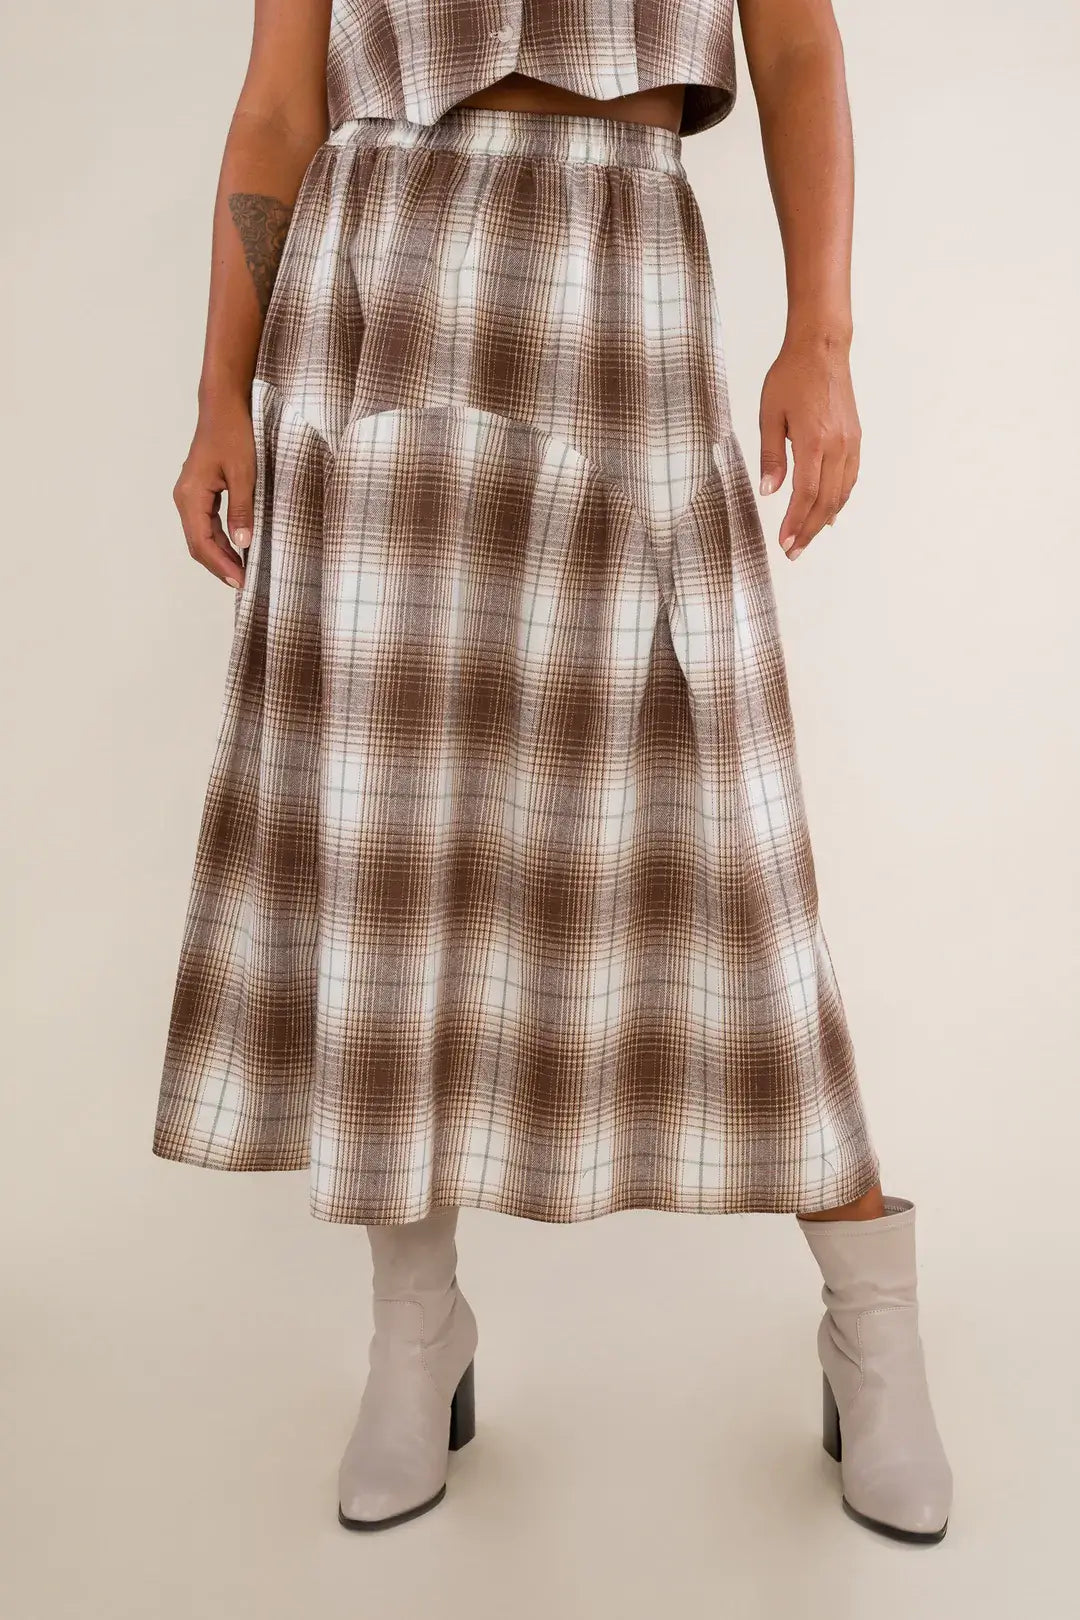 Rachel Flannel Plaid Midi Skirt